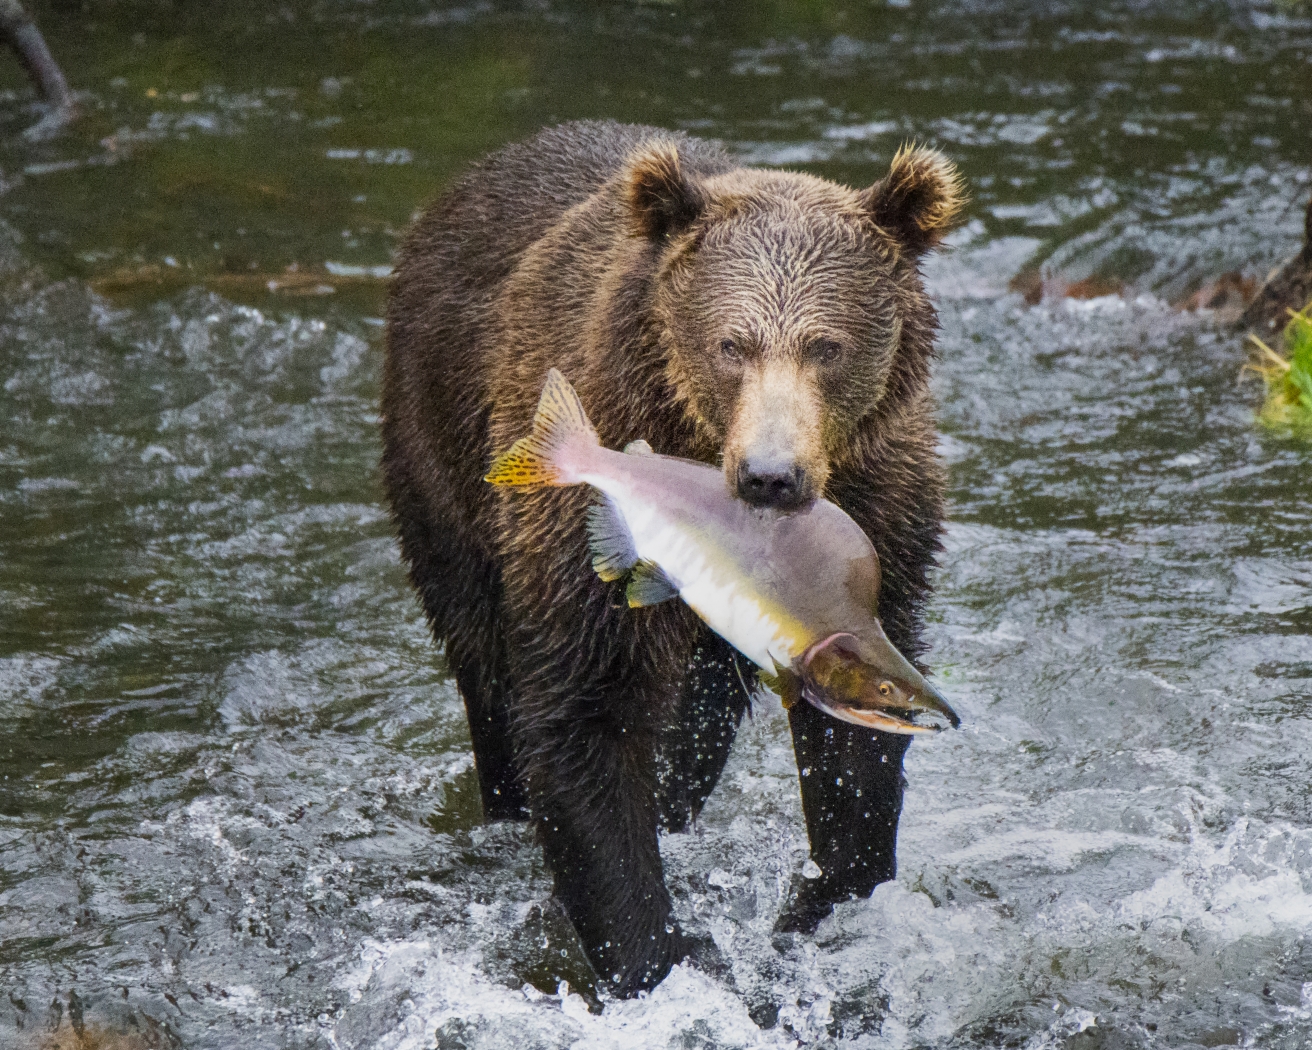 Kodiak bear Posing with Salmon by Danielle D'Ermo